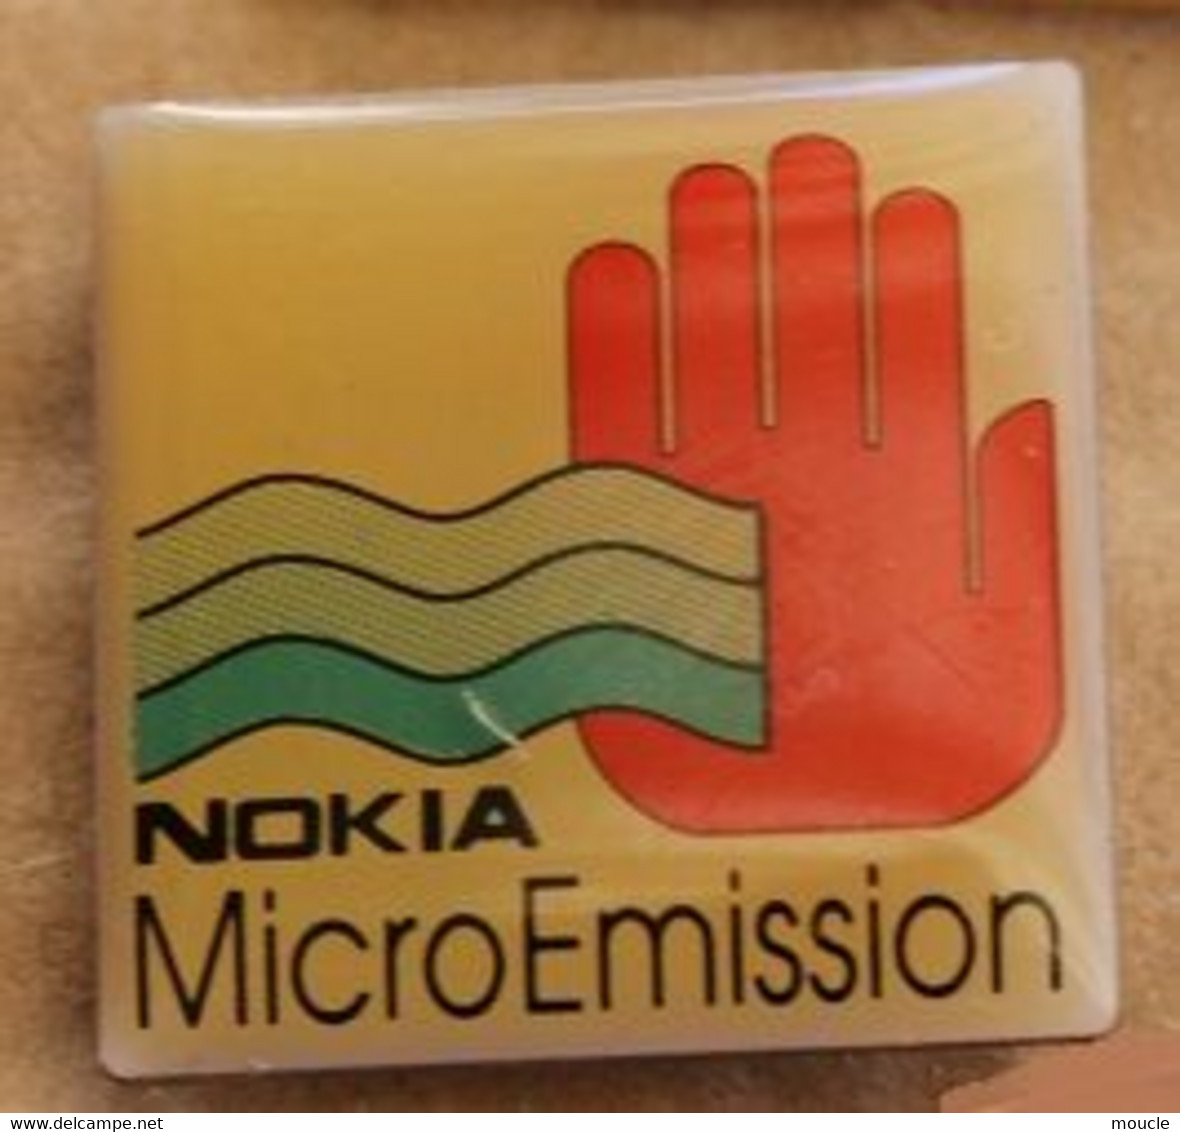 NOKIA - MICRO EMISSION - MAIN - HAND - MANO    -    (15) - Computers